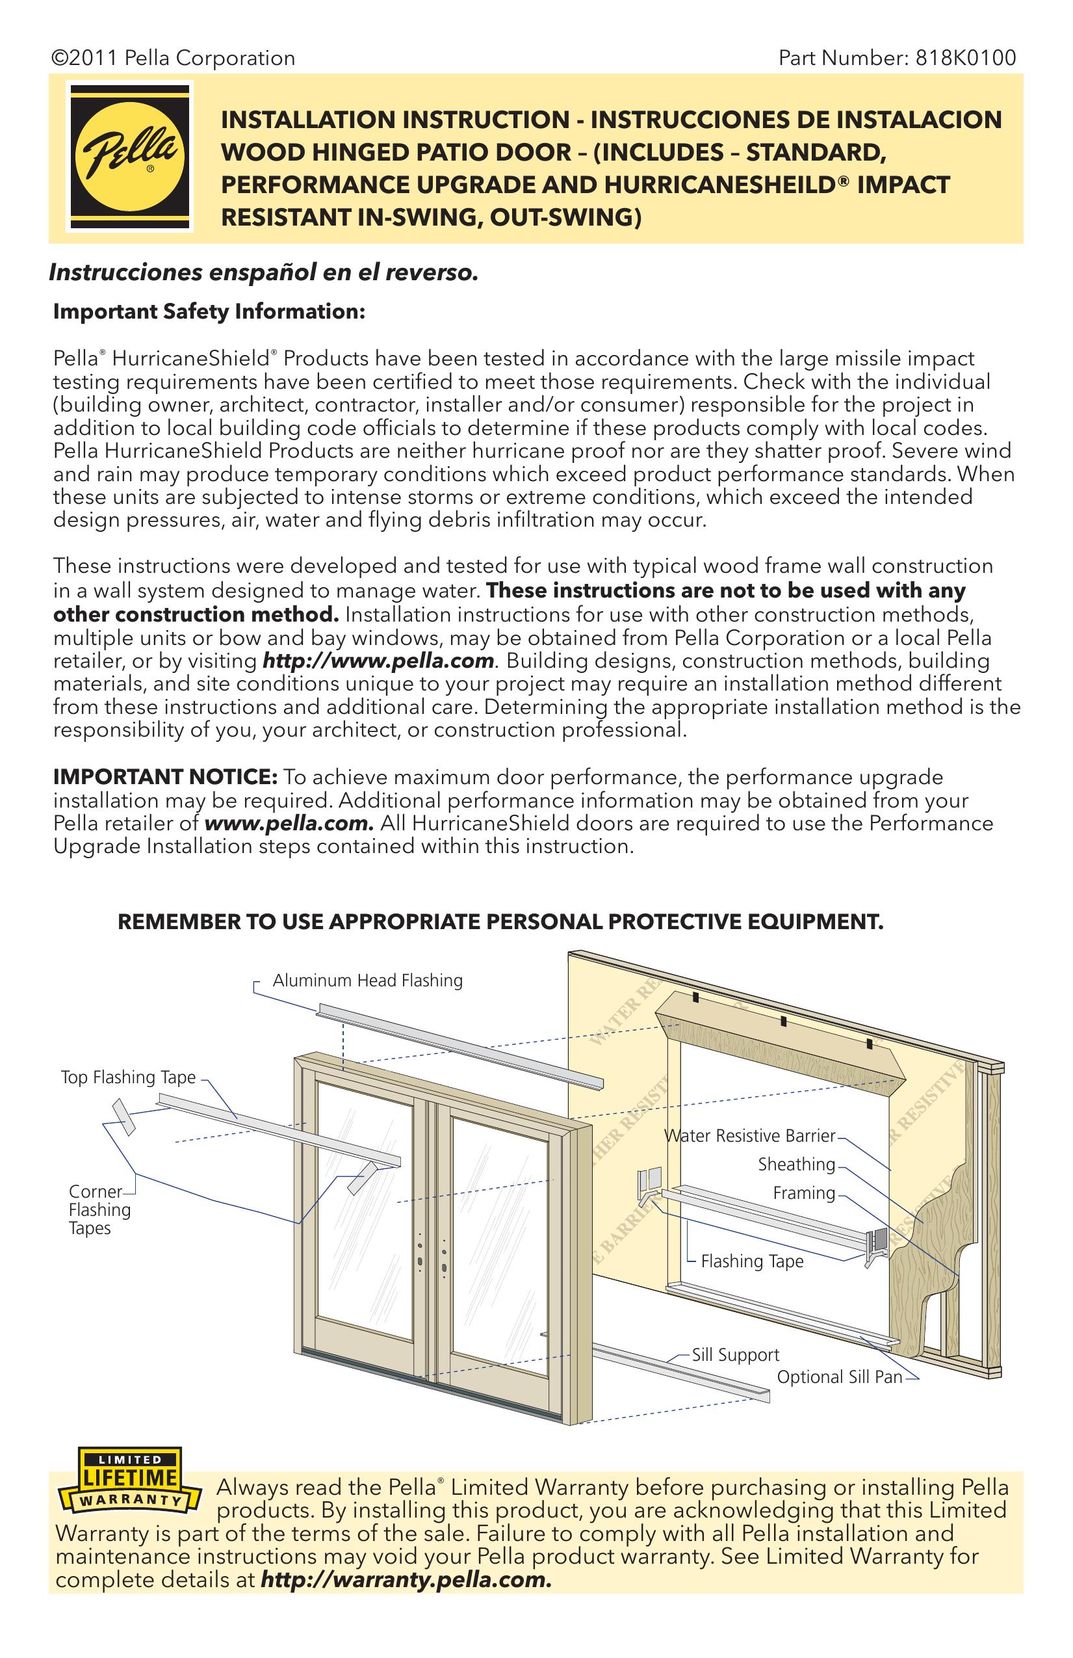 Pella 818K0100 Door User Manual